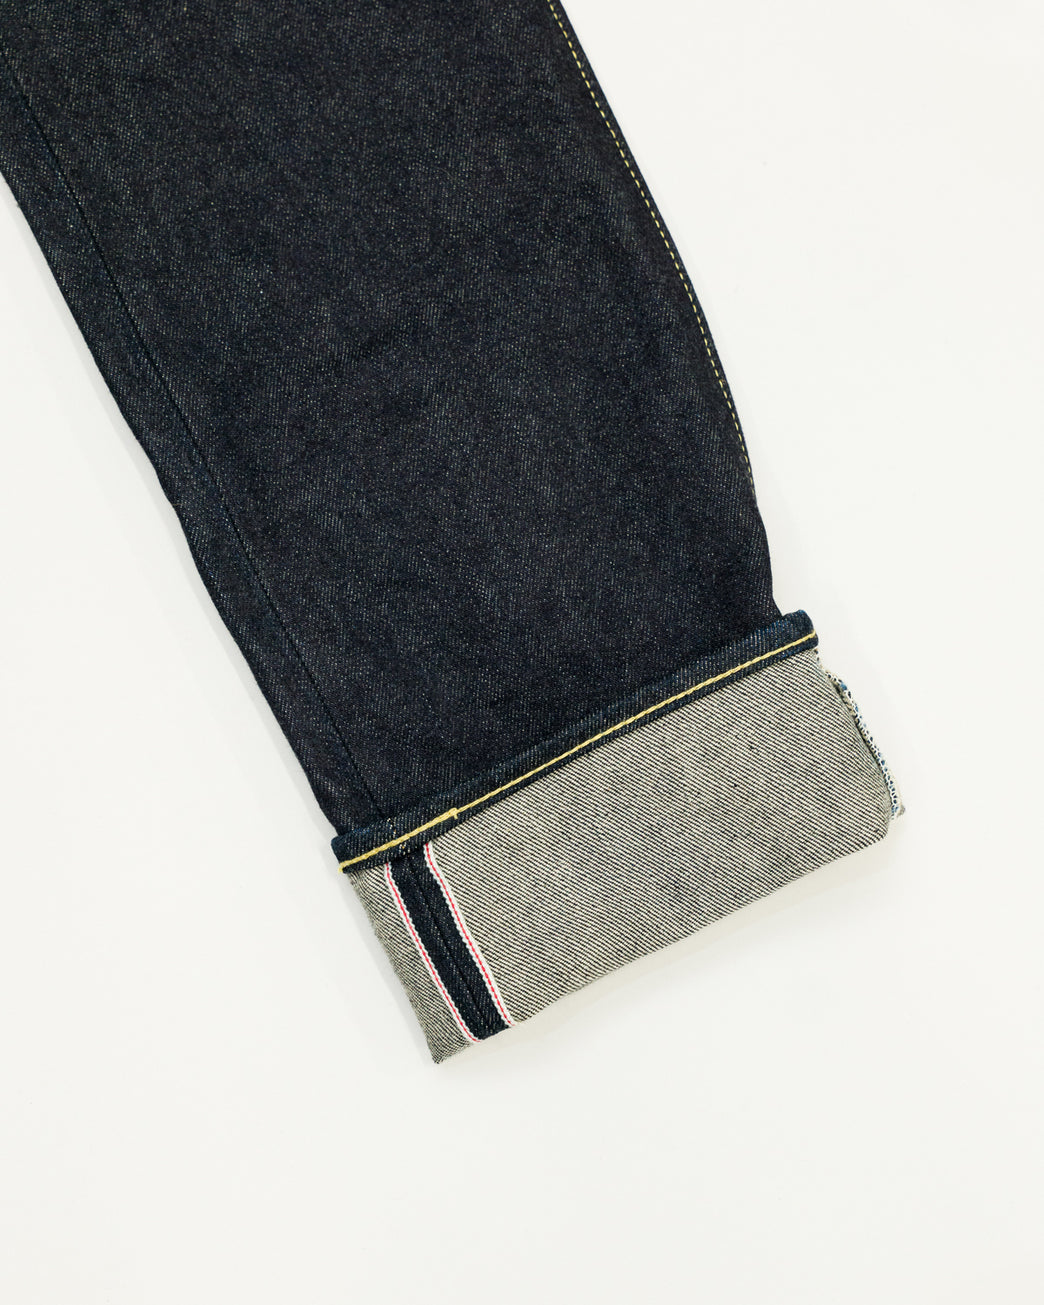 IH-777S-142 - 14oz Selvedge Denim Slim Tapered Jeans - Indigo | James Dant